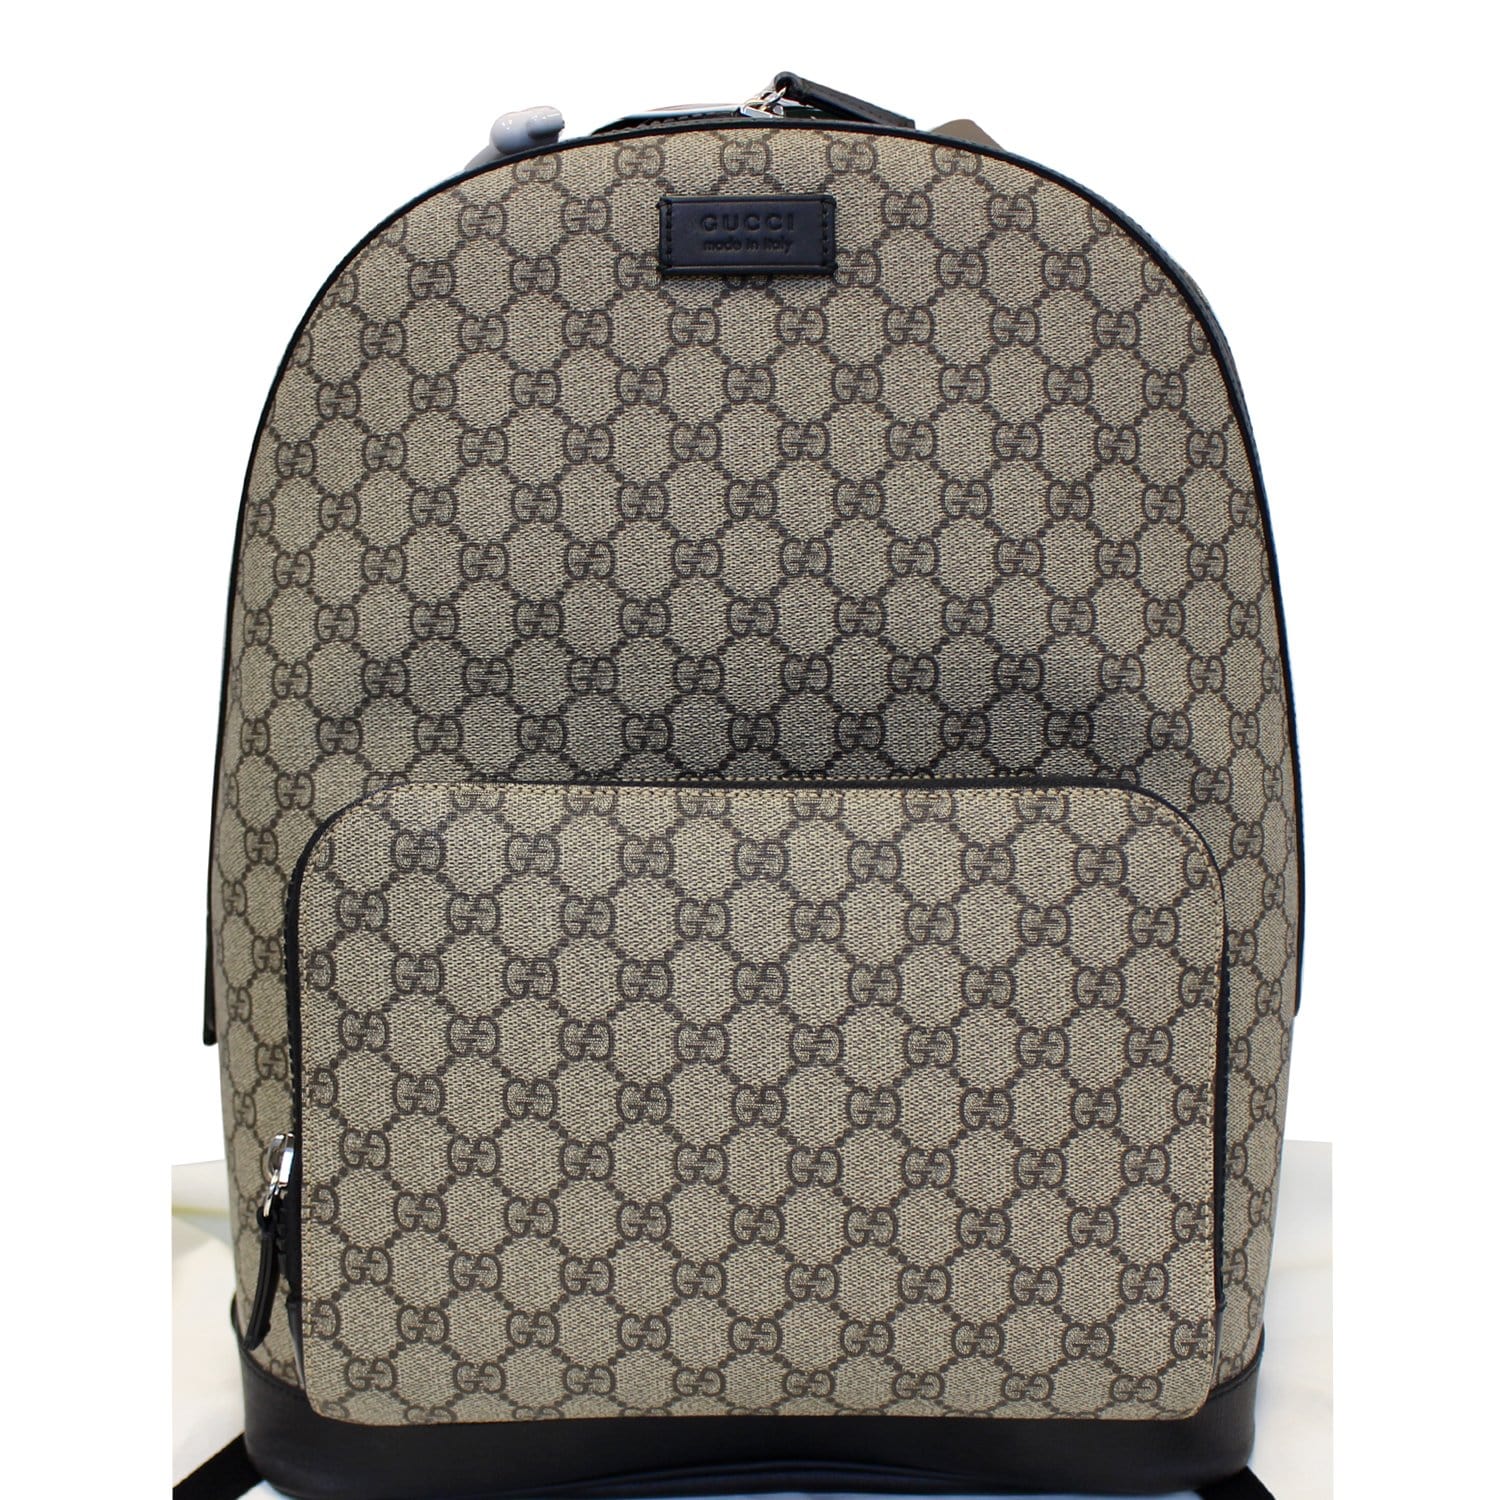 Gucci monogram backpack 1195.00❌sold❌